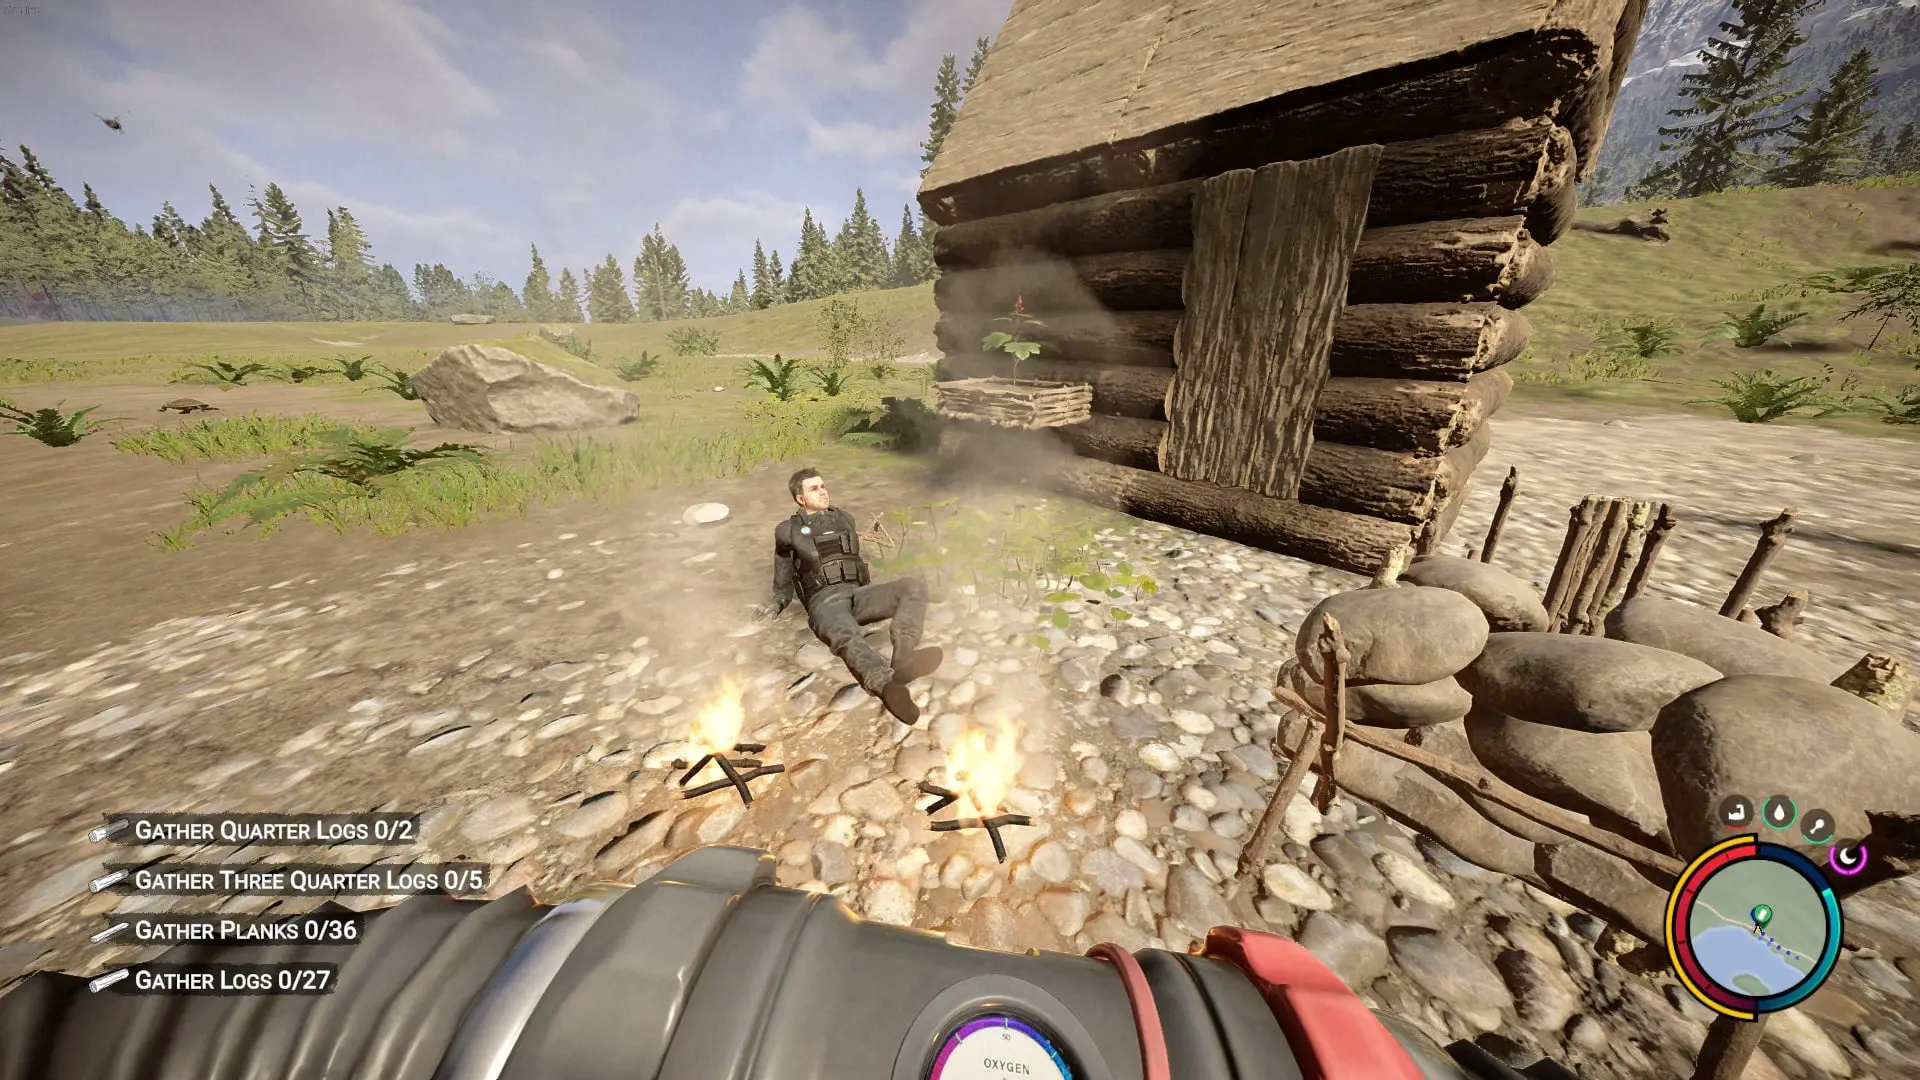 El jugador ve a Kelvin descansando junto a la fogata en Children of the Forest.